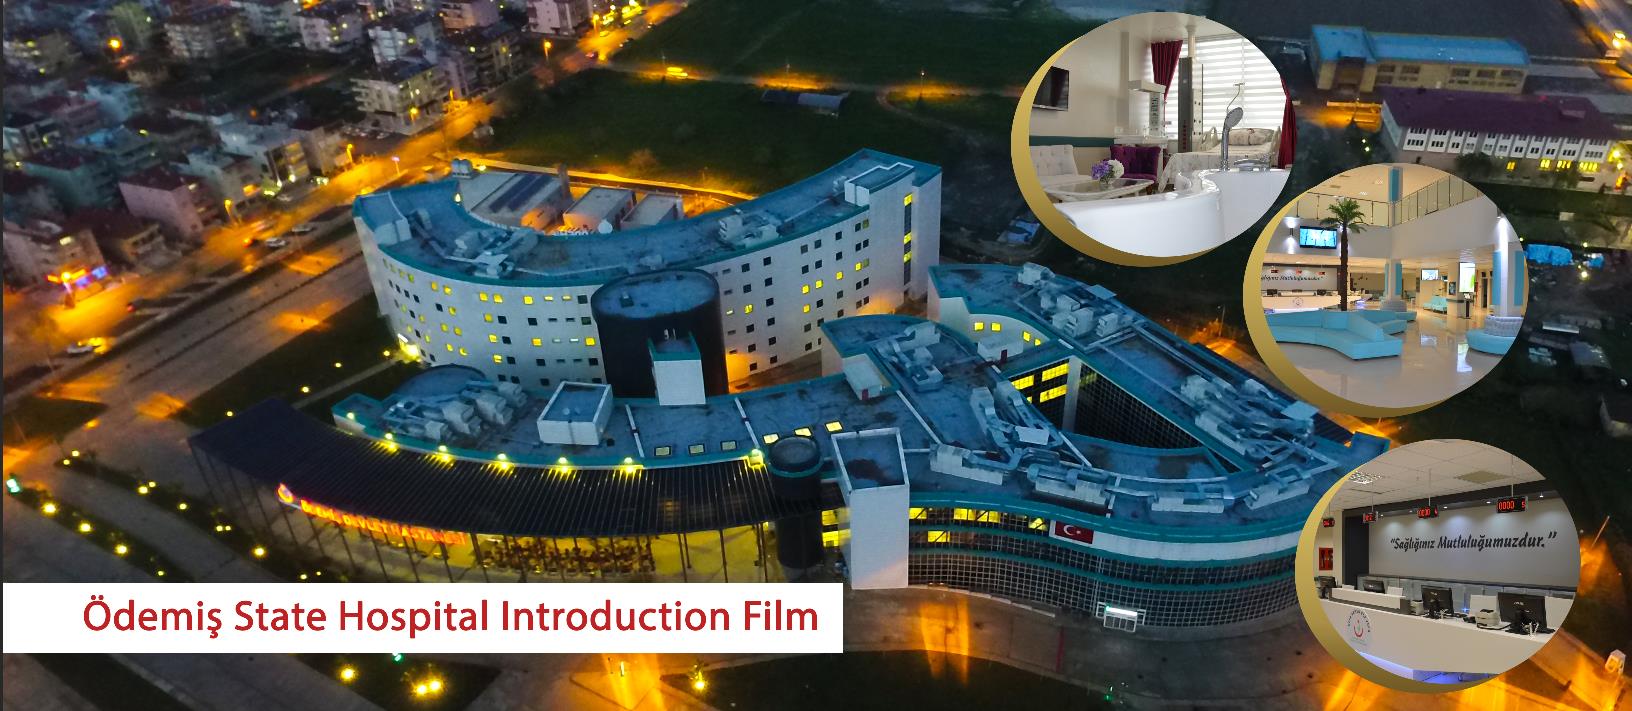 Ödemiş State Hospital Introduction Film